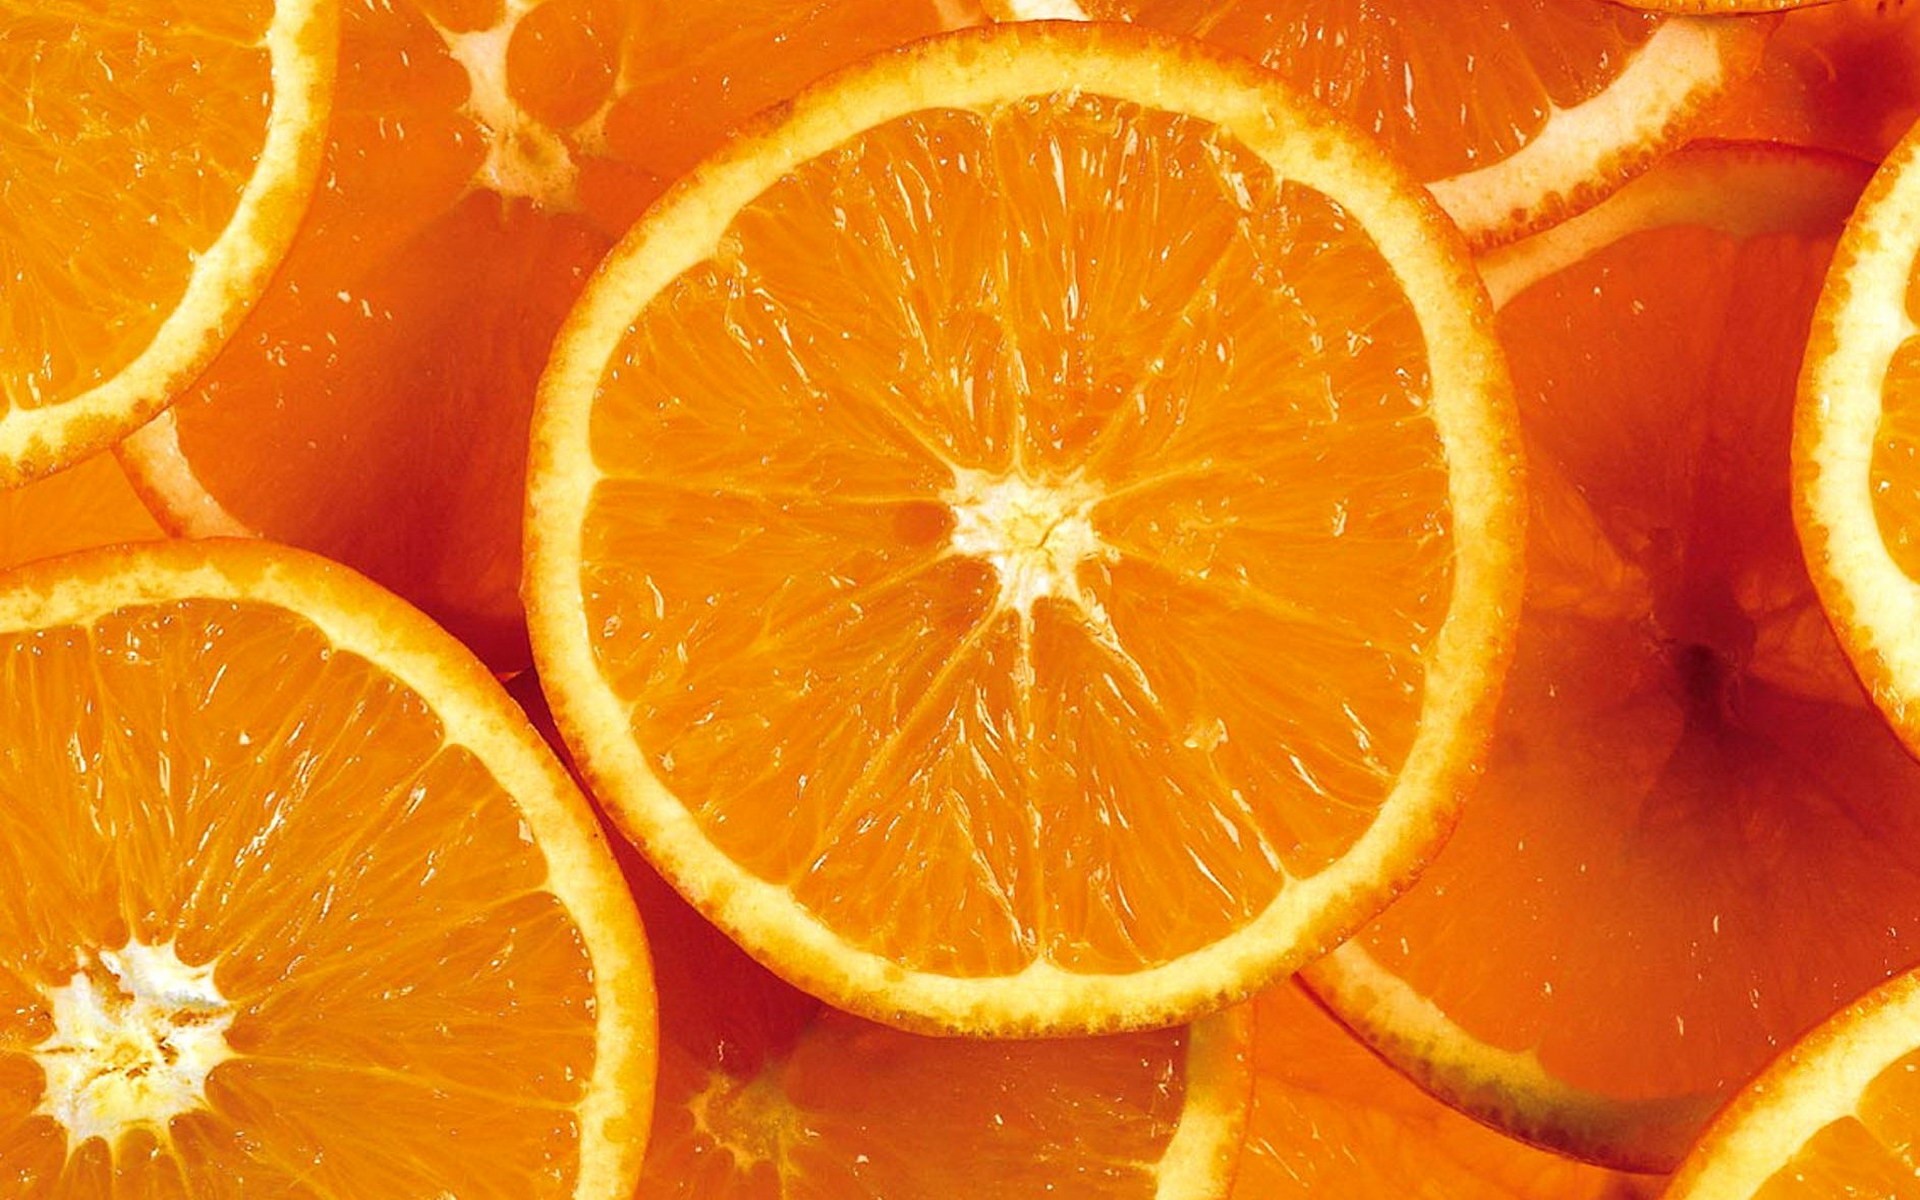 General 1920x1200 orange (fruit) fruit food slices closeup